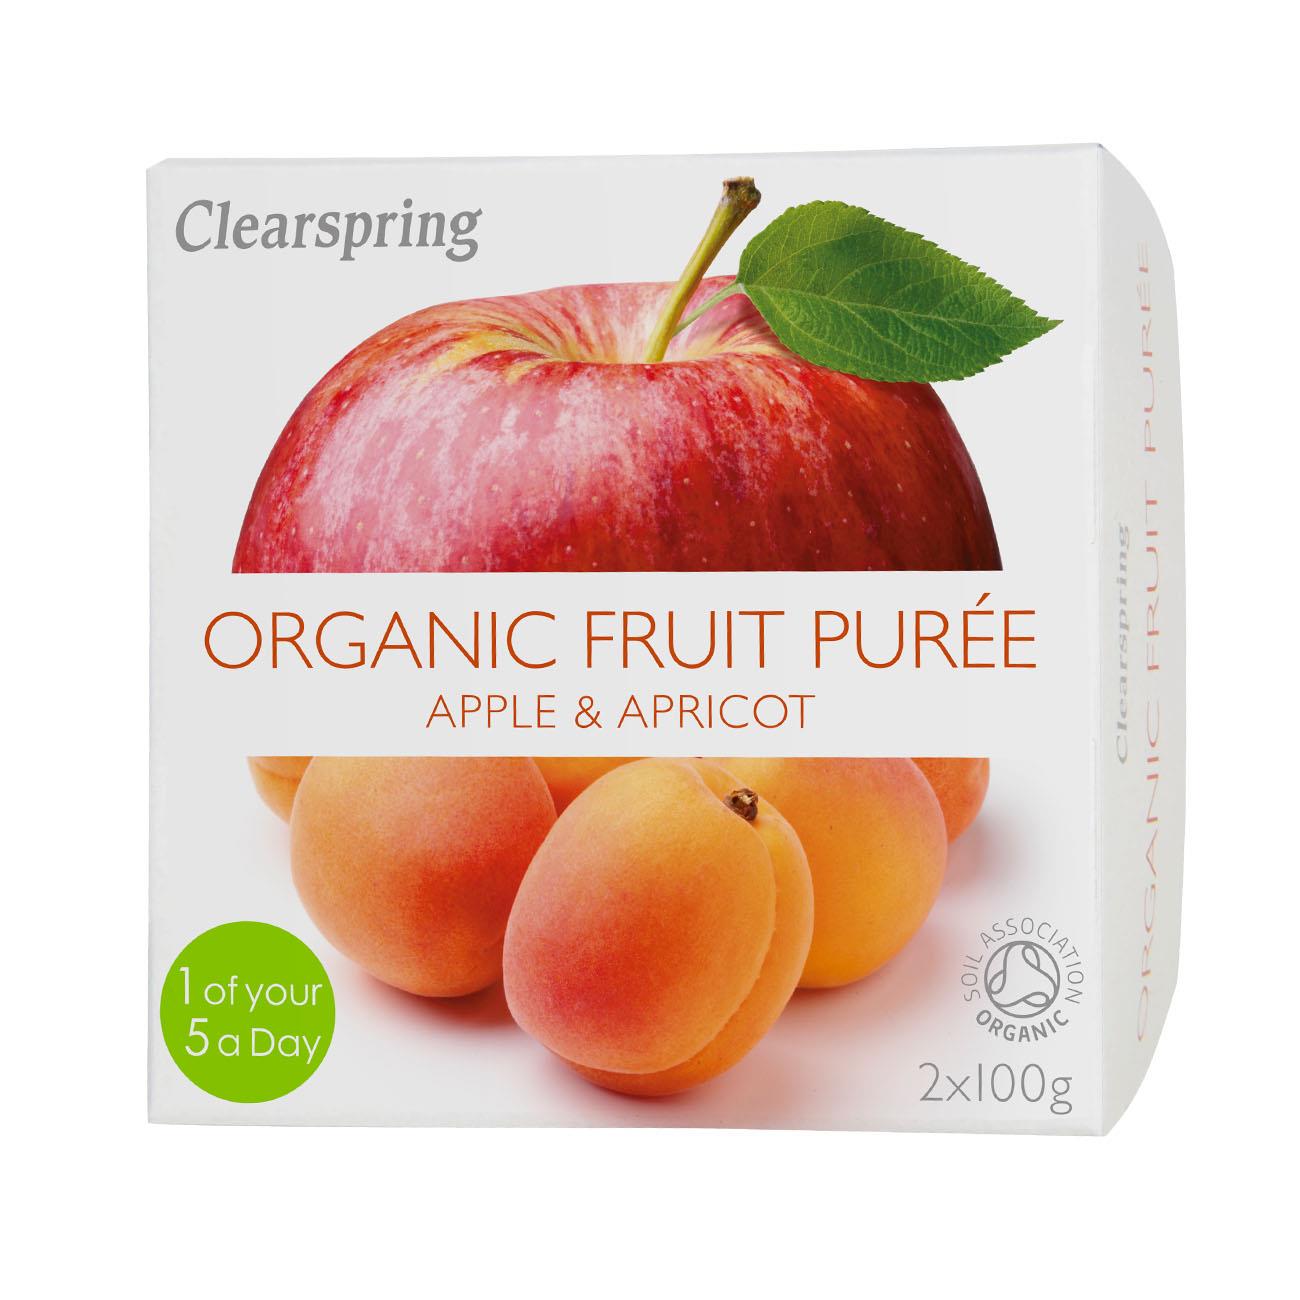 Organic Apple and Apricot Fruit Puree 2x100g